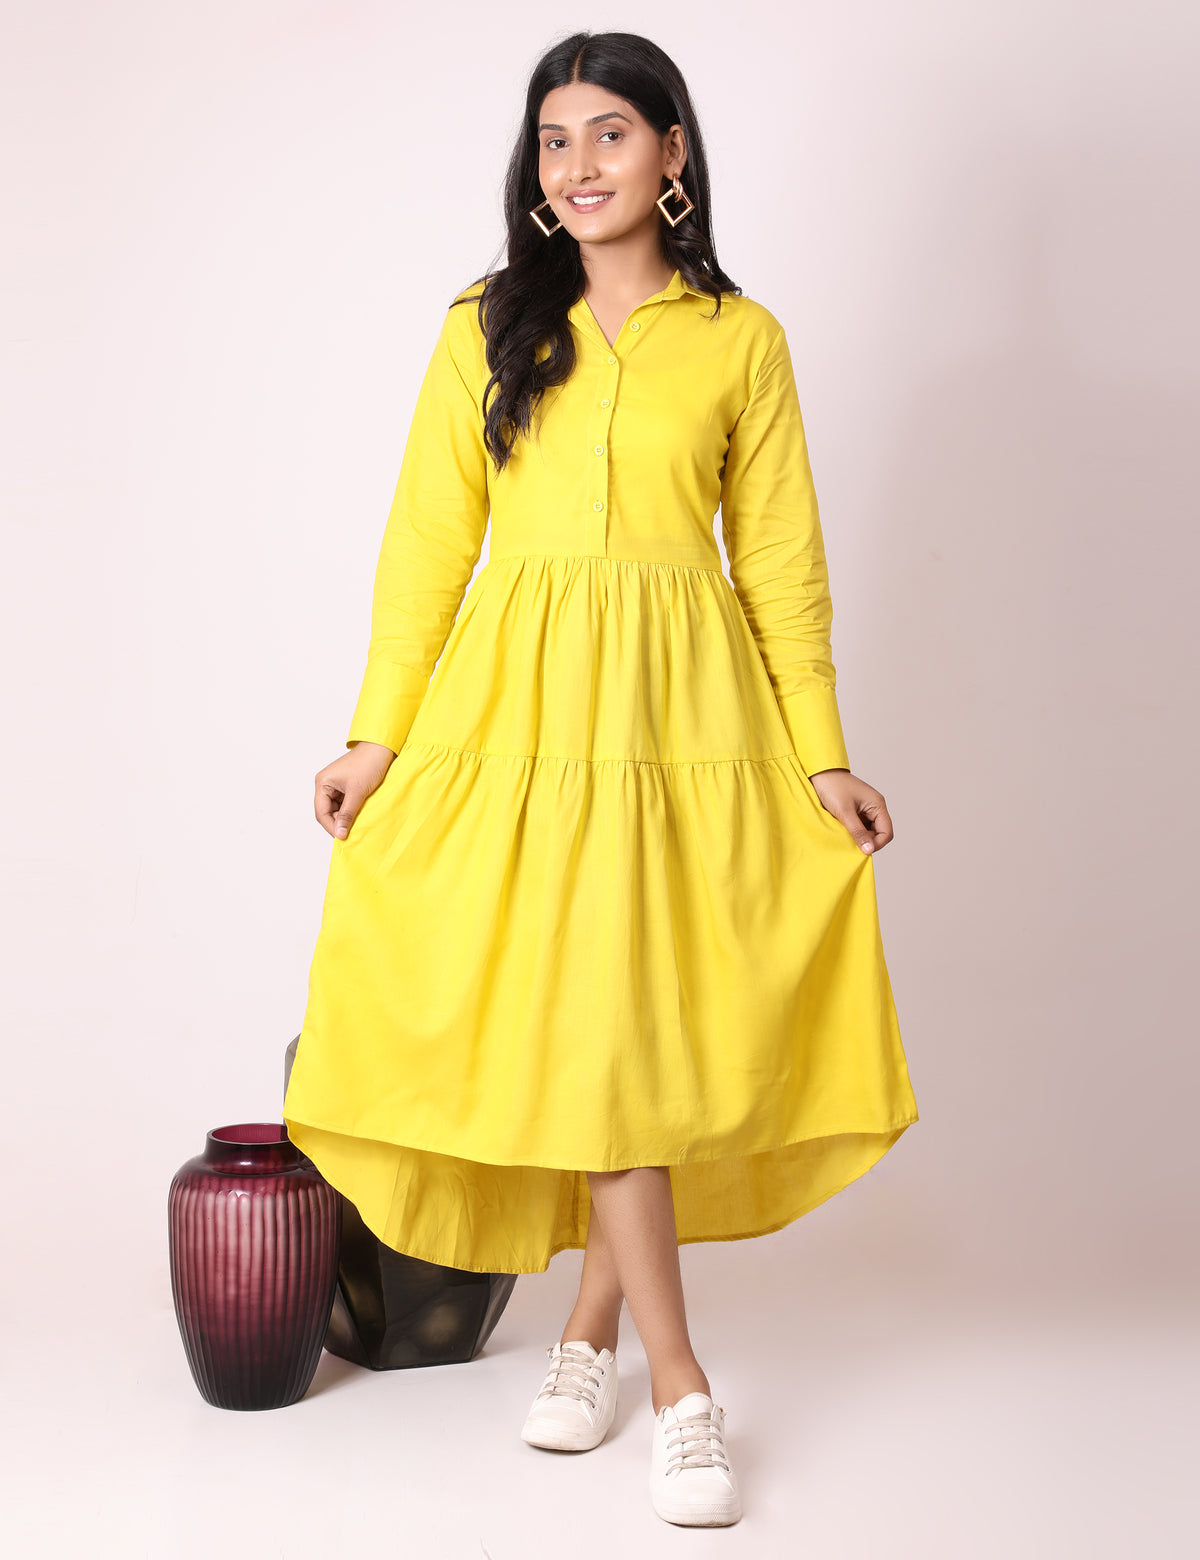 Lemon yellow maxi dress